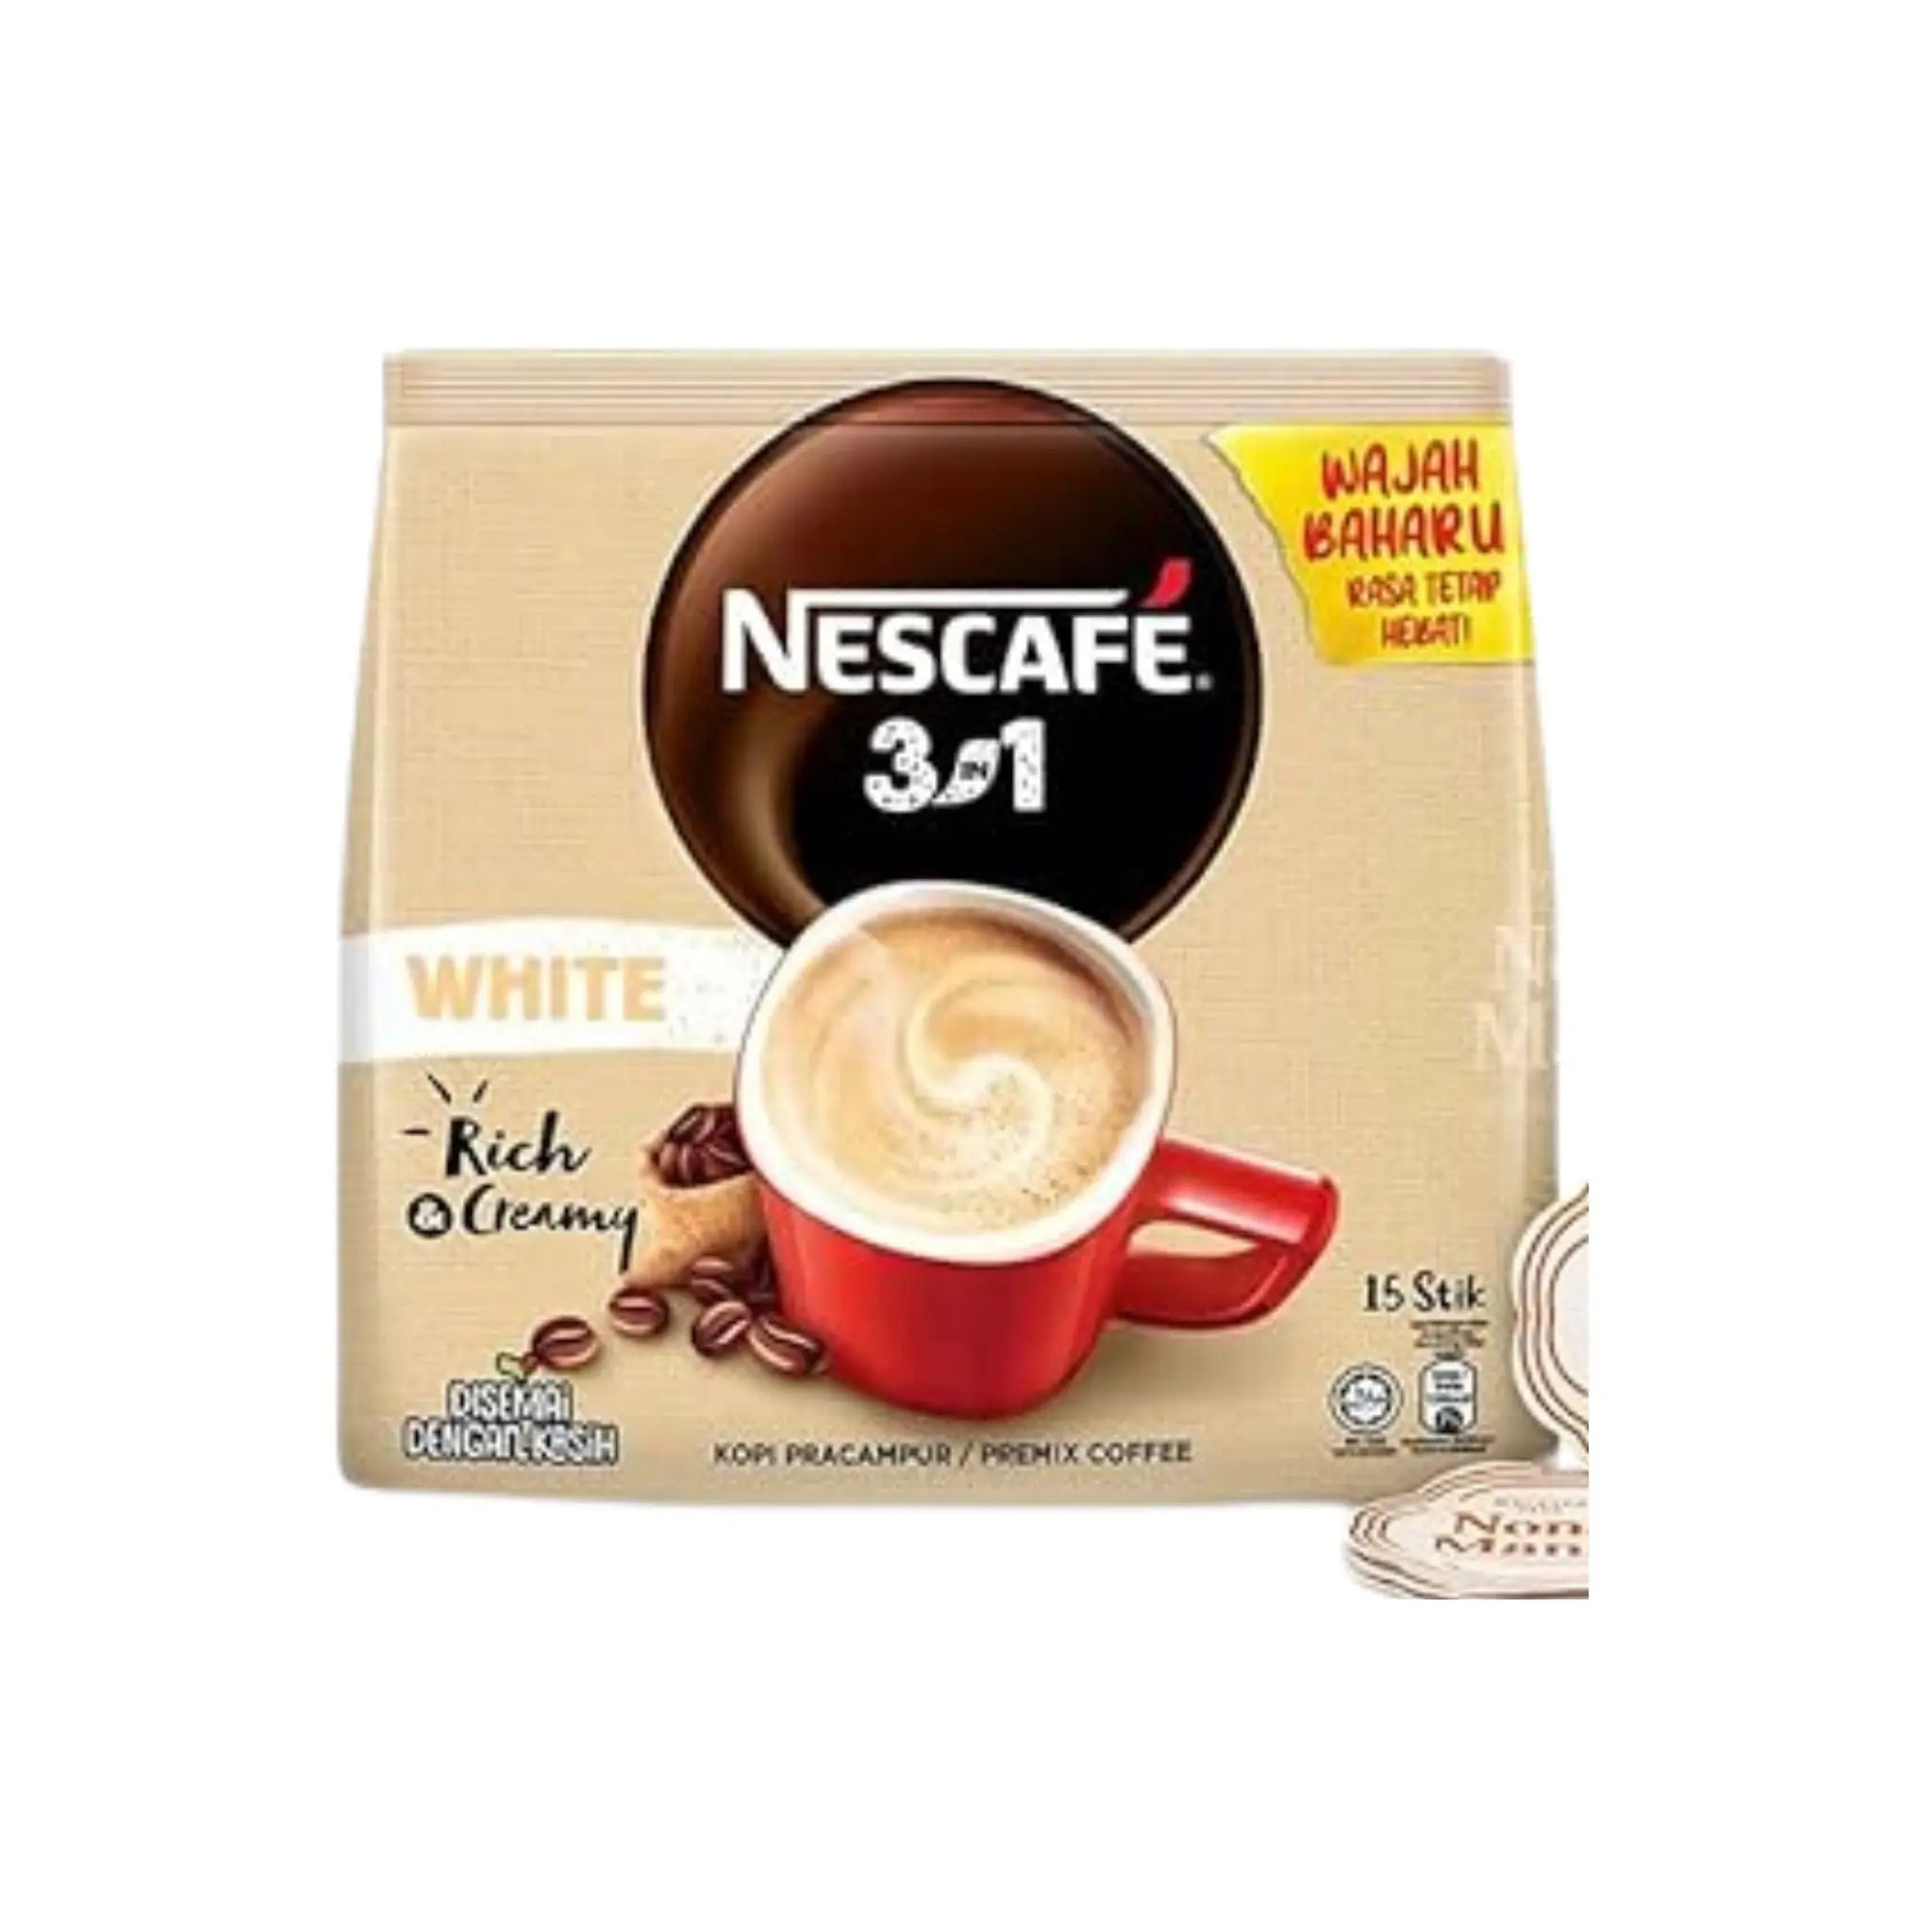 Nescafe 3in1 White - 24x15x32g (1 carton) - Marino.AE